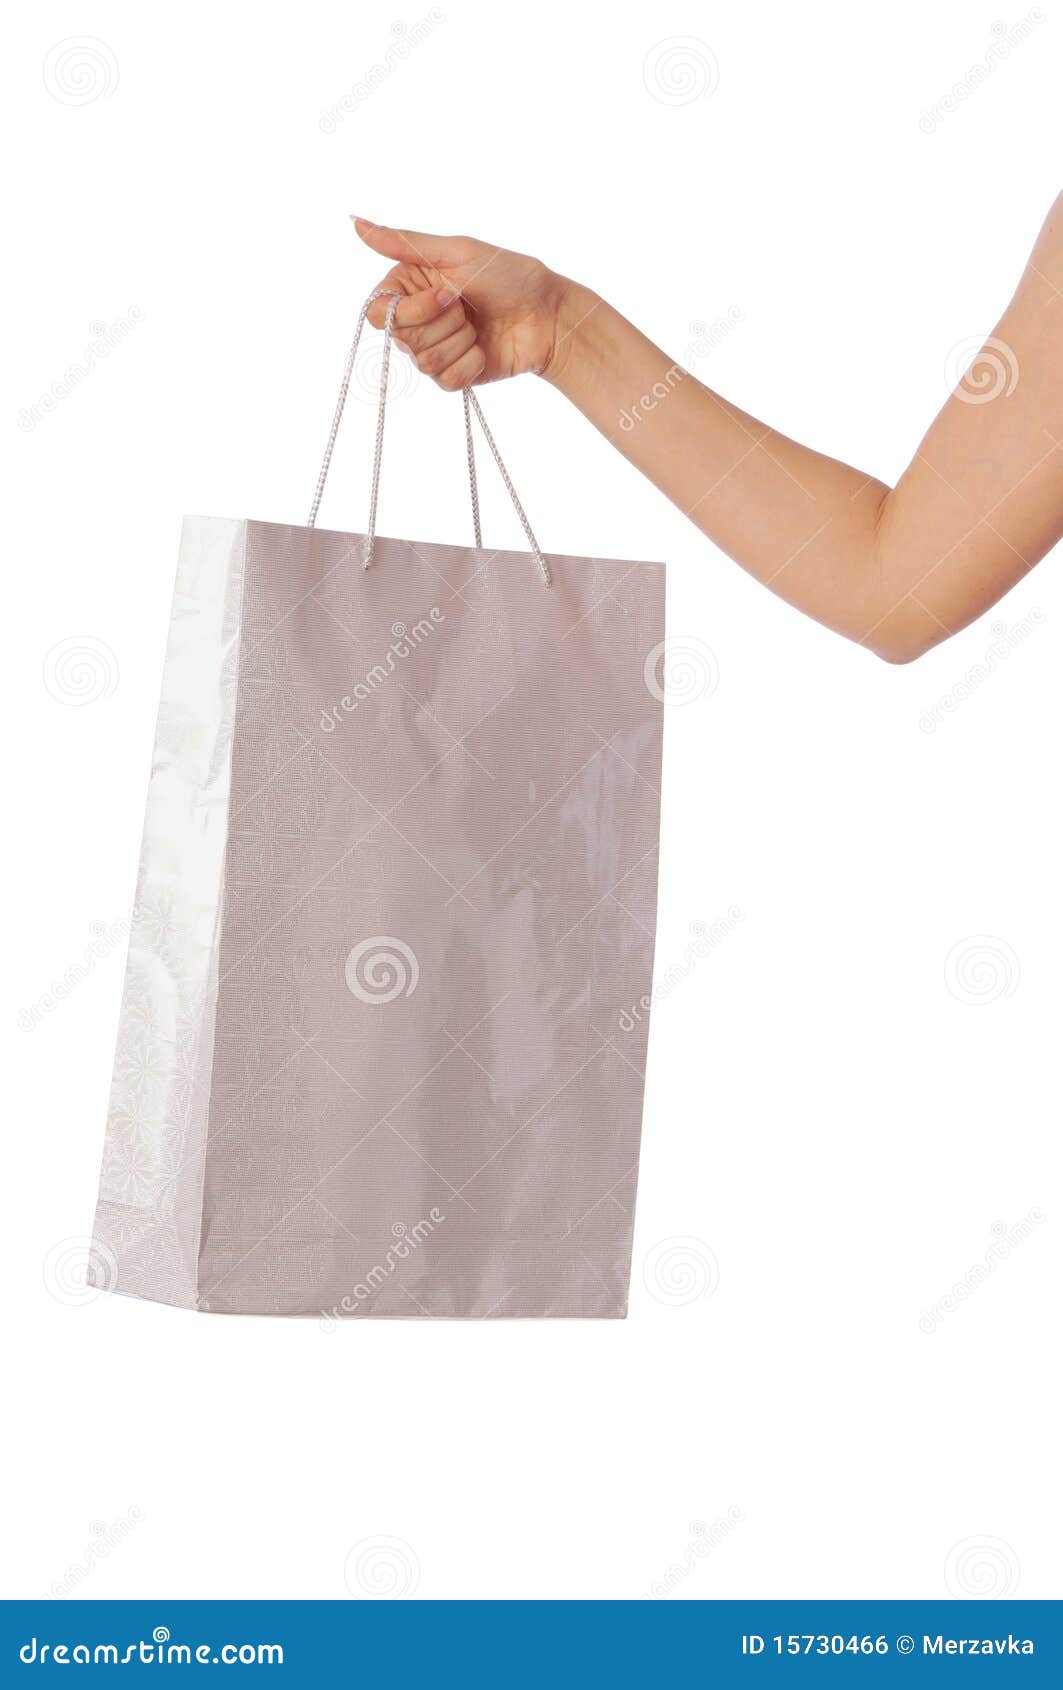 Paper bag stock photo. Image of design, merchandise, female - 15730466